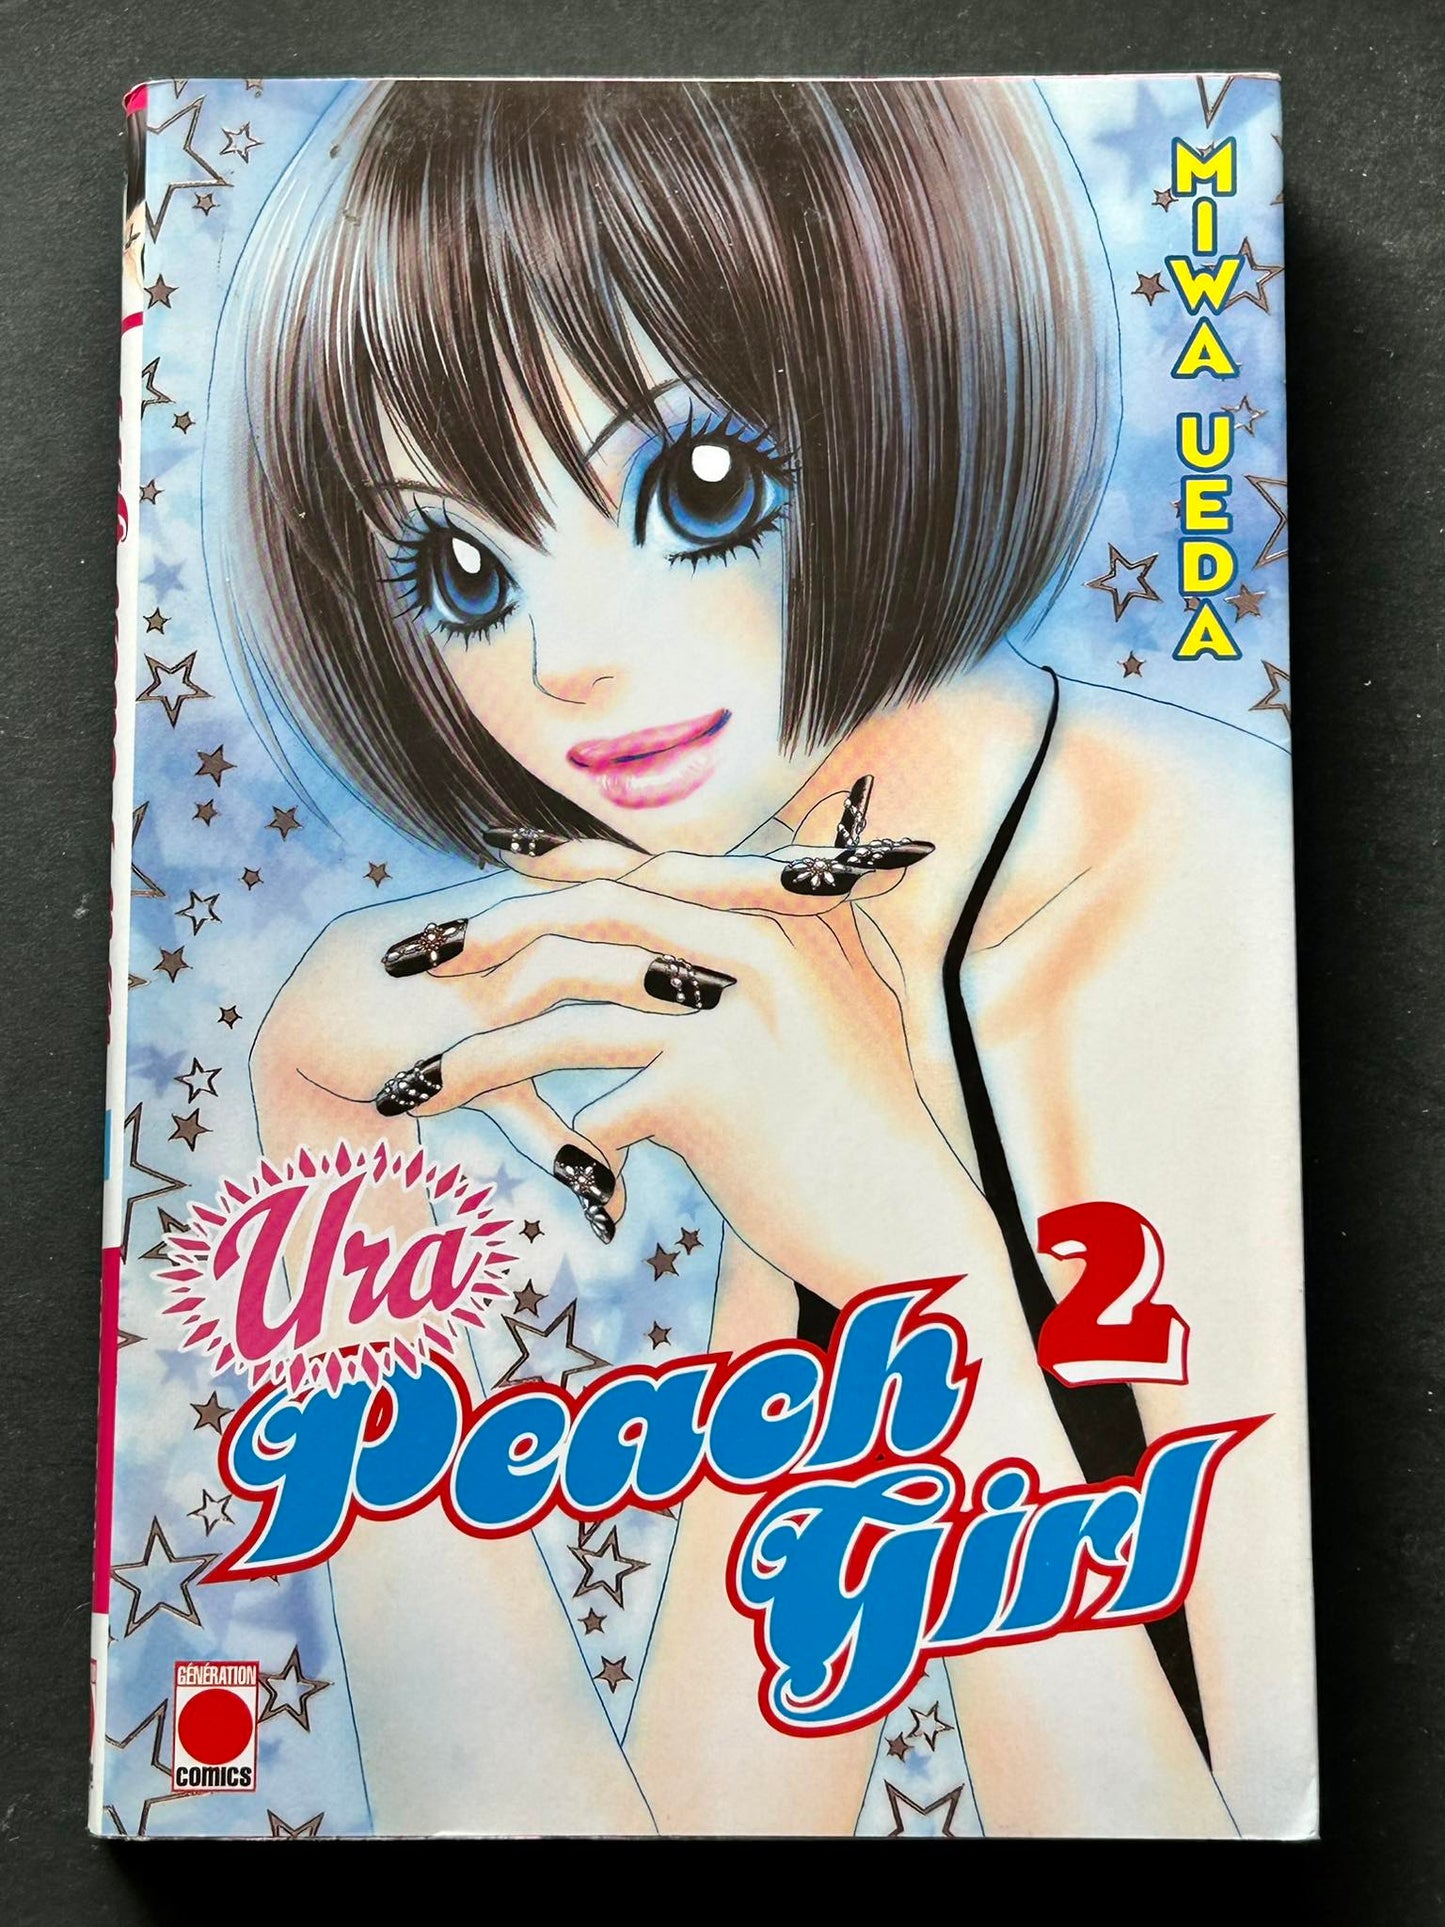 Ura Peach girl, volume 2